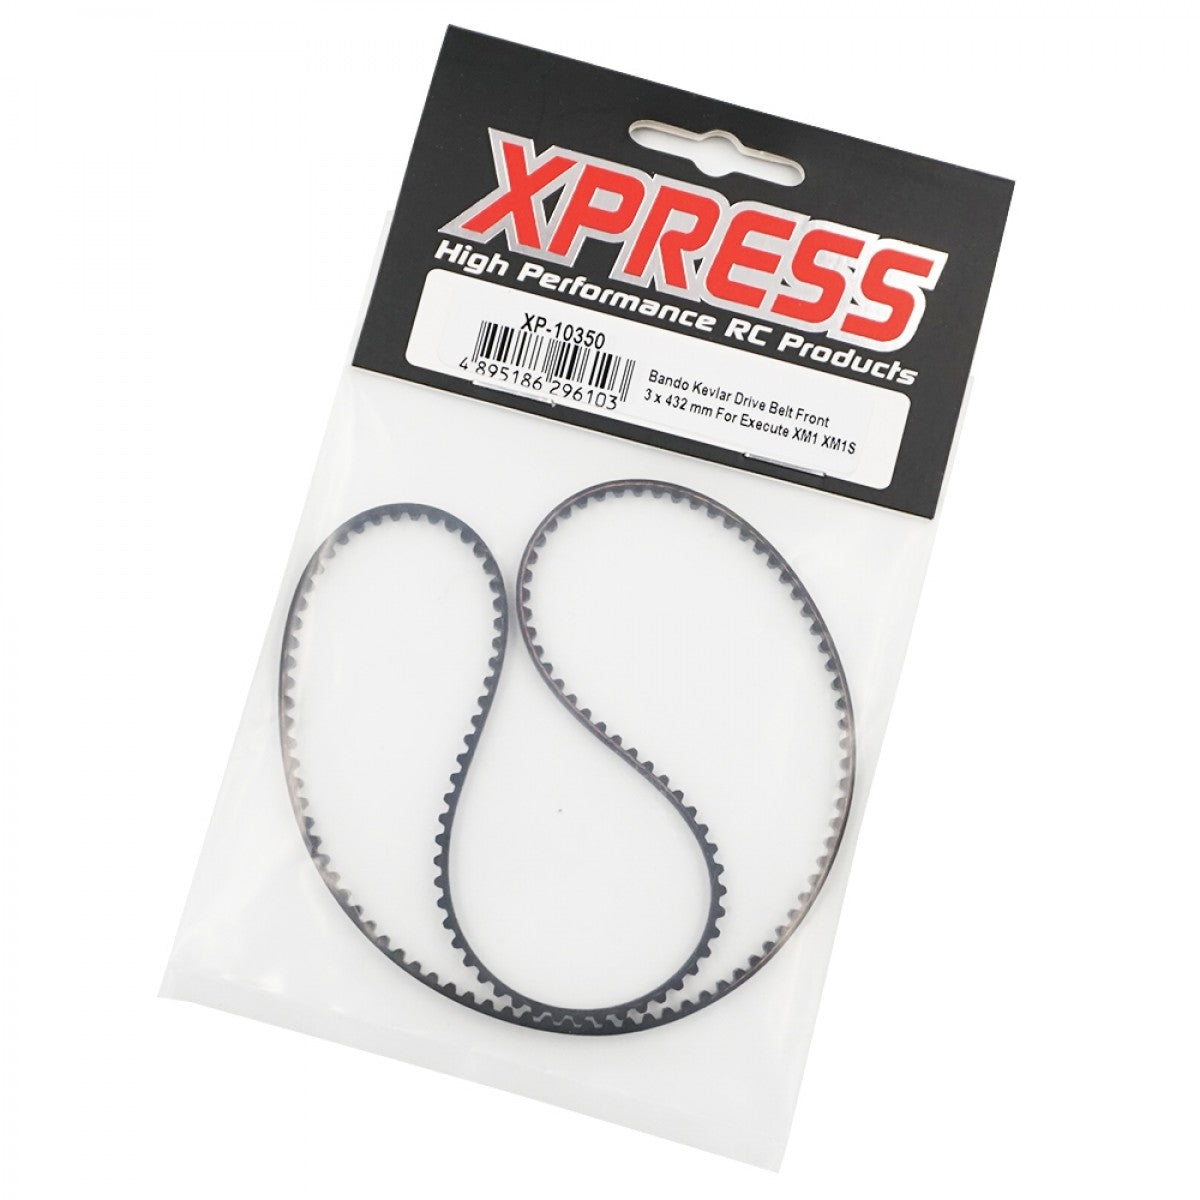 Xpress XP-10350 Bando Kevlar Drive Belt Front 3 x 432mm for Execute XM1 XM1S